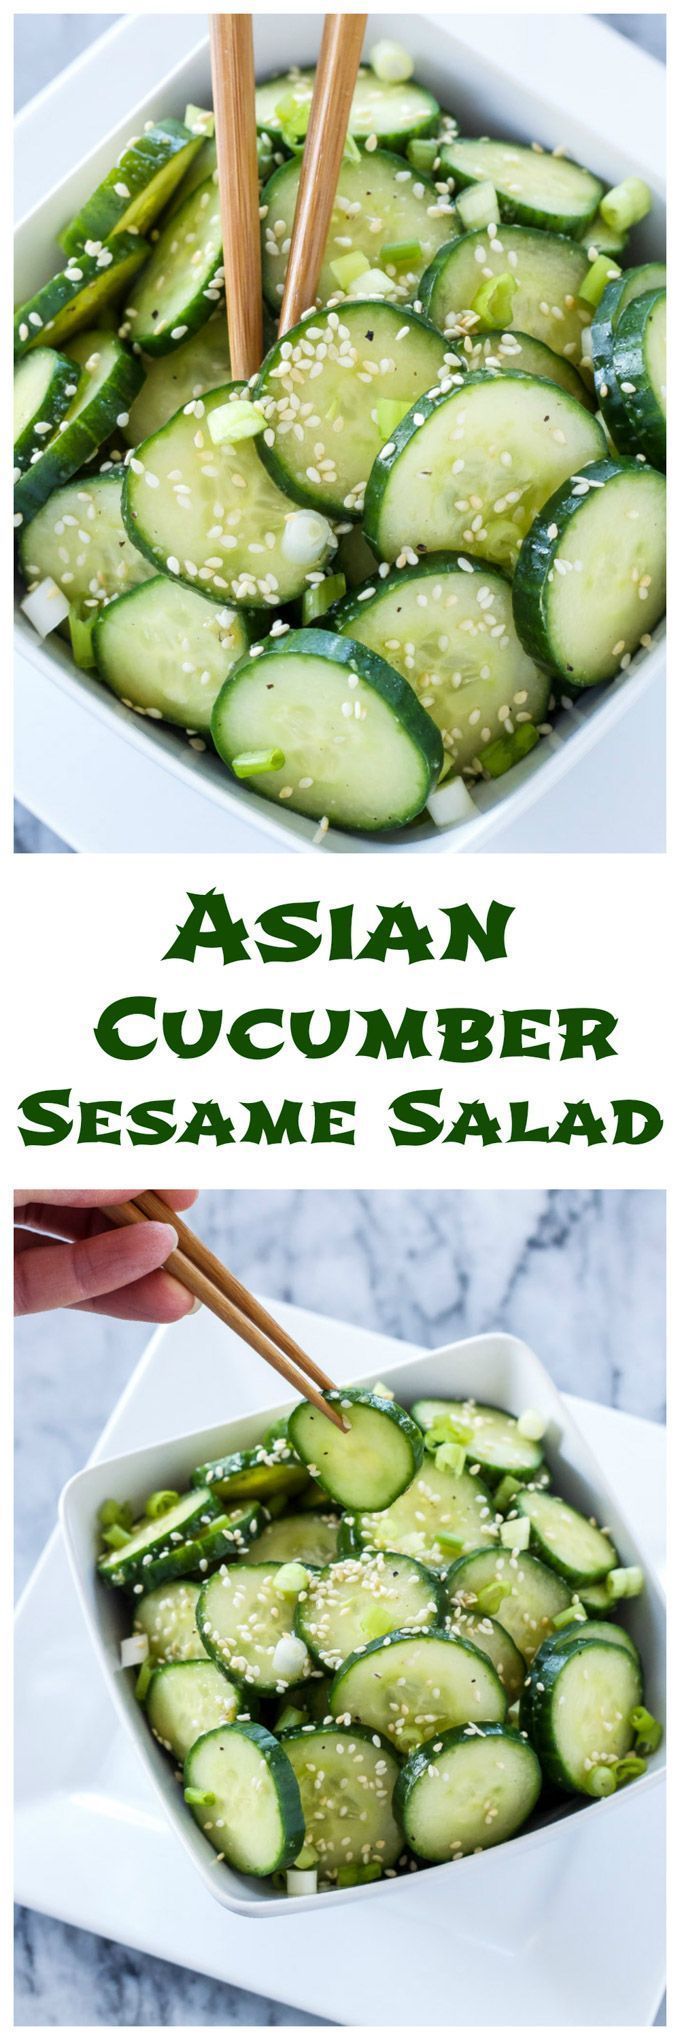 Asian Cucumber Sesame Salad | This fresh, gluten free, vegan cucumber salad is full of delicious Asian flavors!